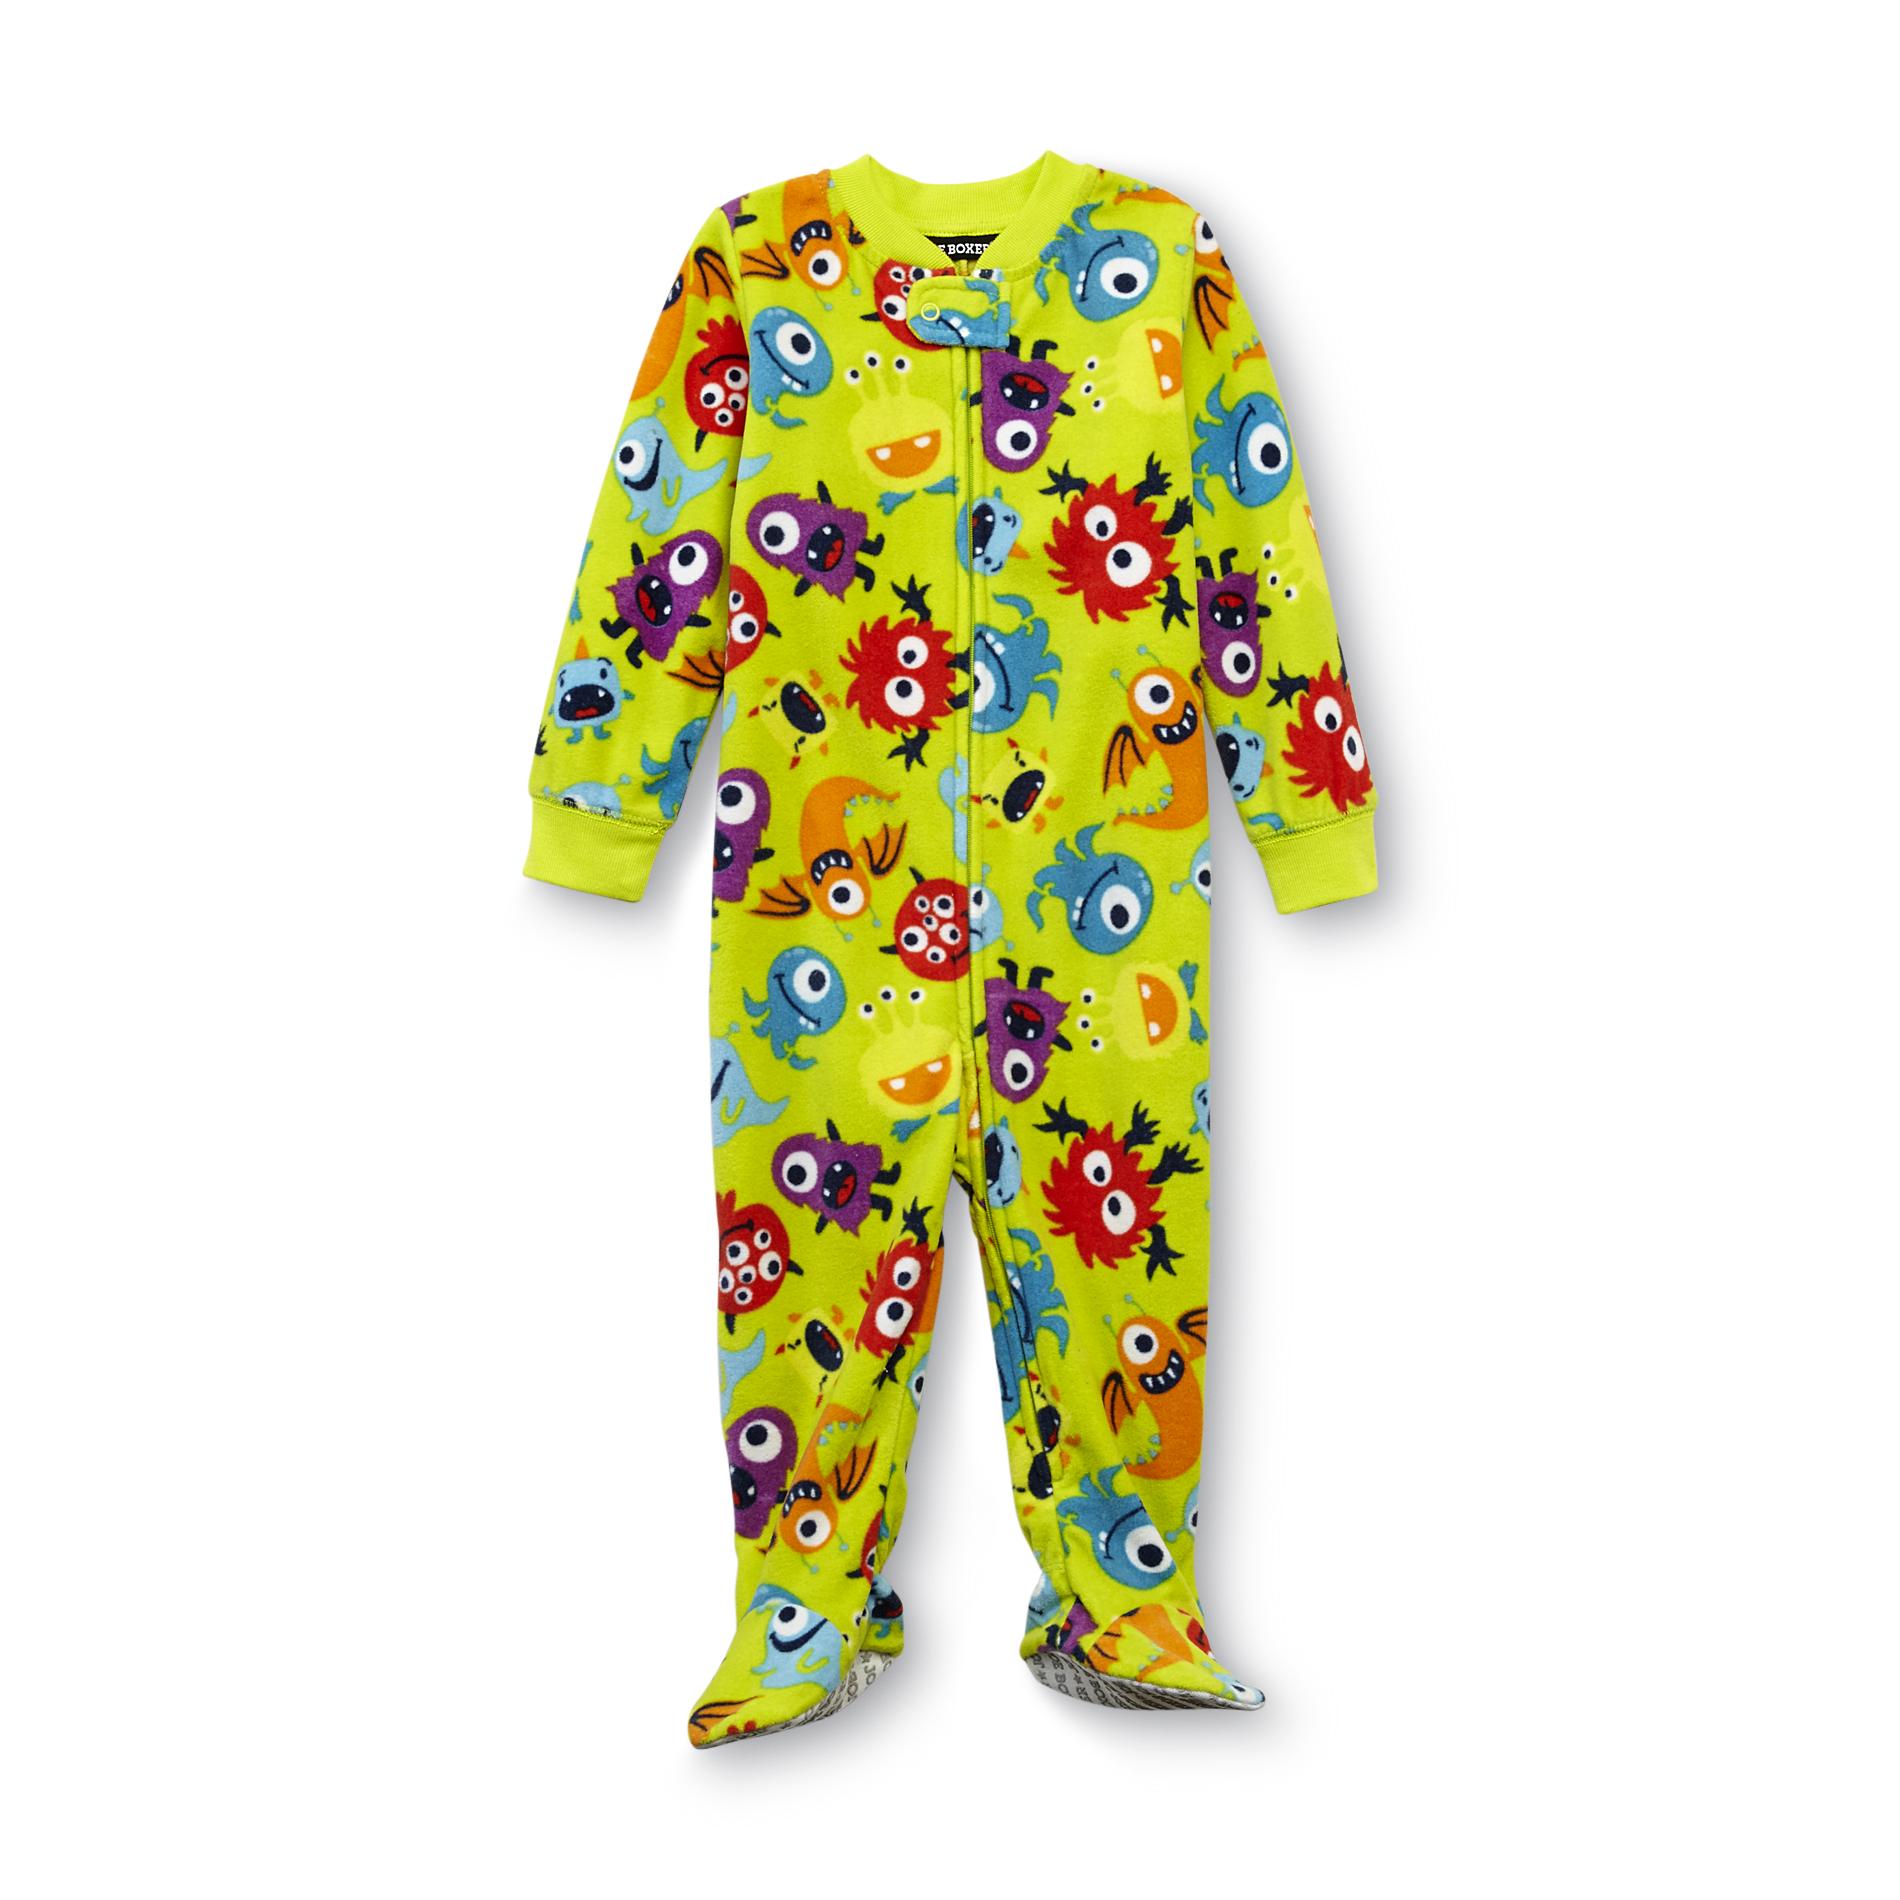 Joe Boxer Infant & Toddler Boy's Footed Sleeper Pajamas - Monster